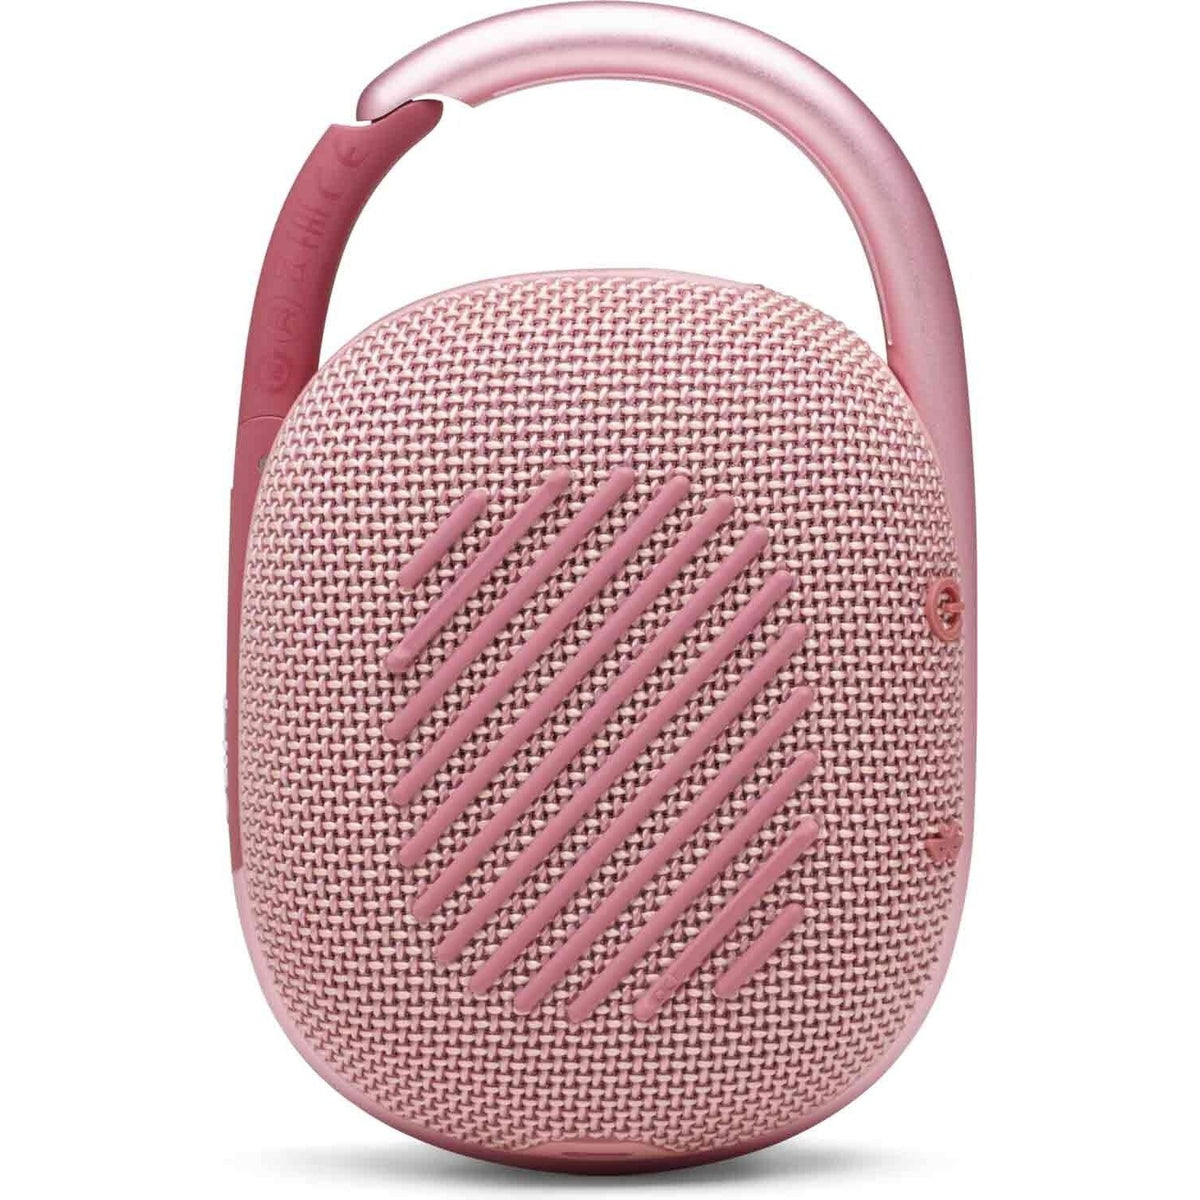 Bluetooth reproduktor JBL Clip 4, růžový OBAL POŠKOZEN